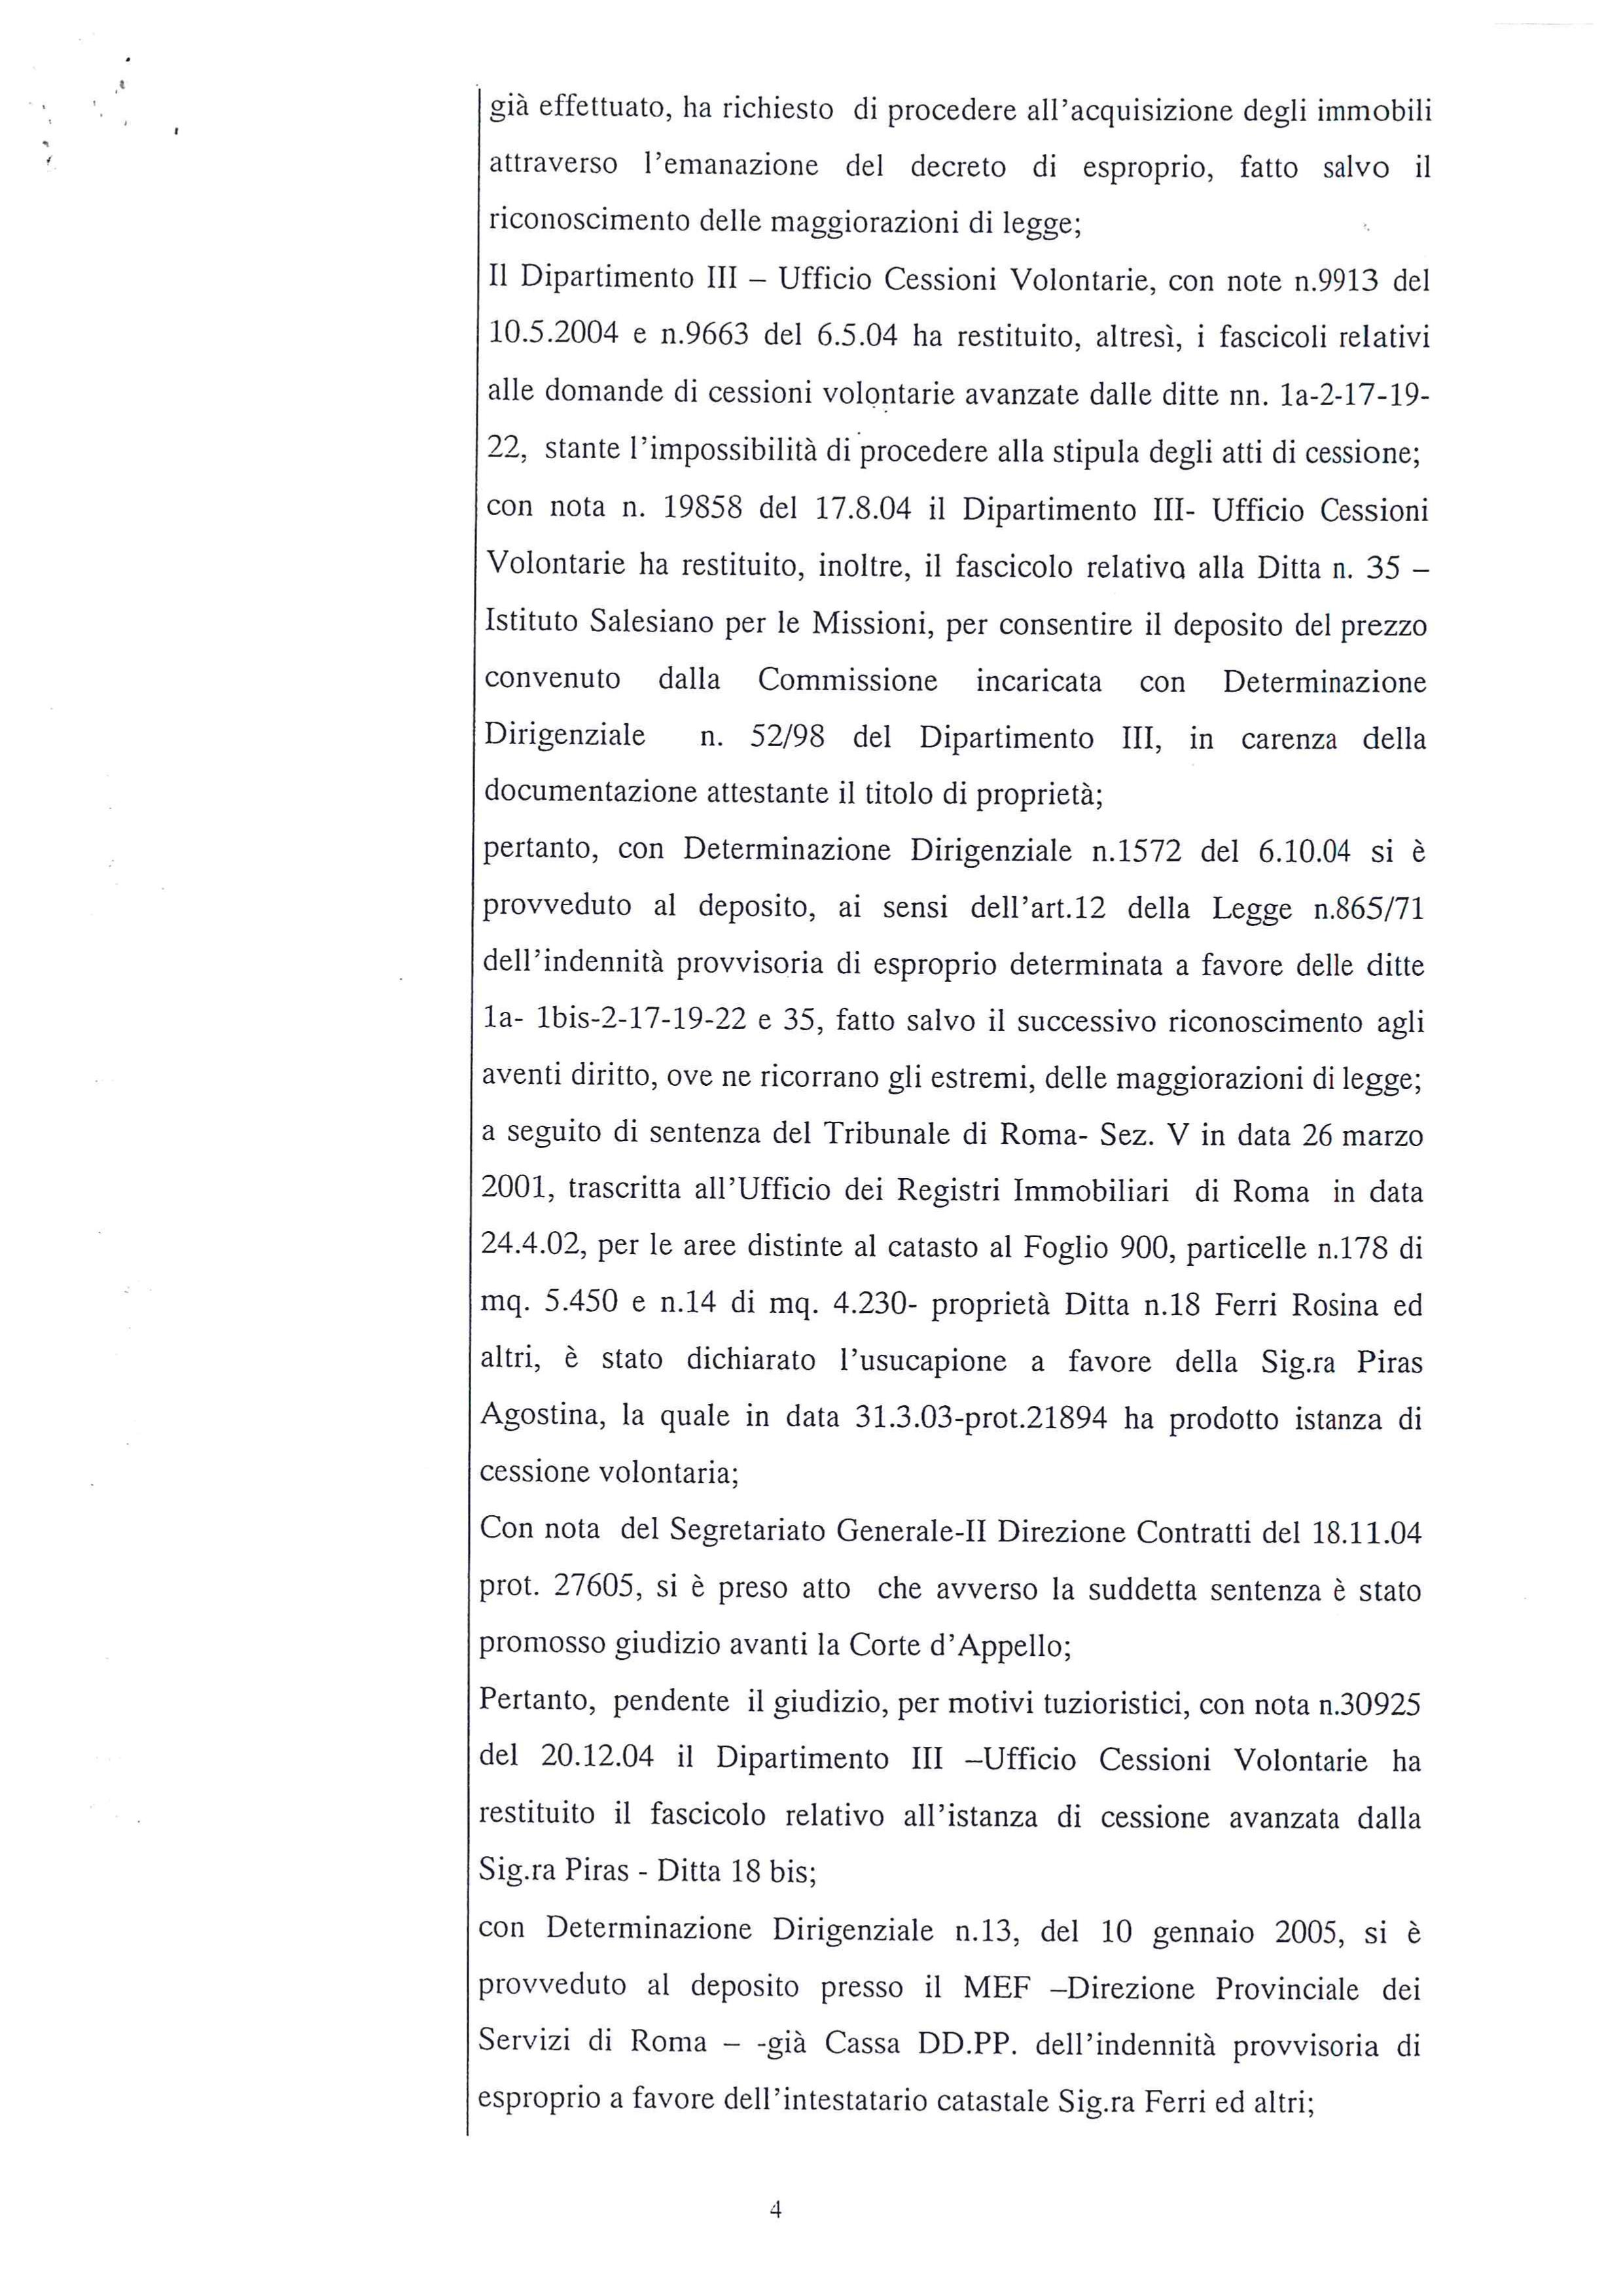 2005 Decreto esproprio Veltroni 11